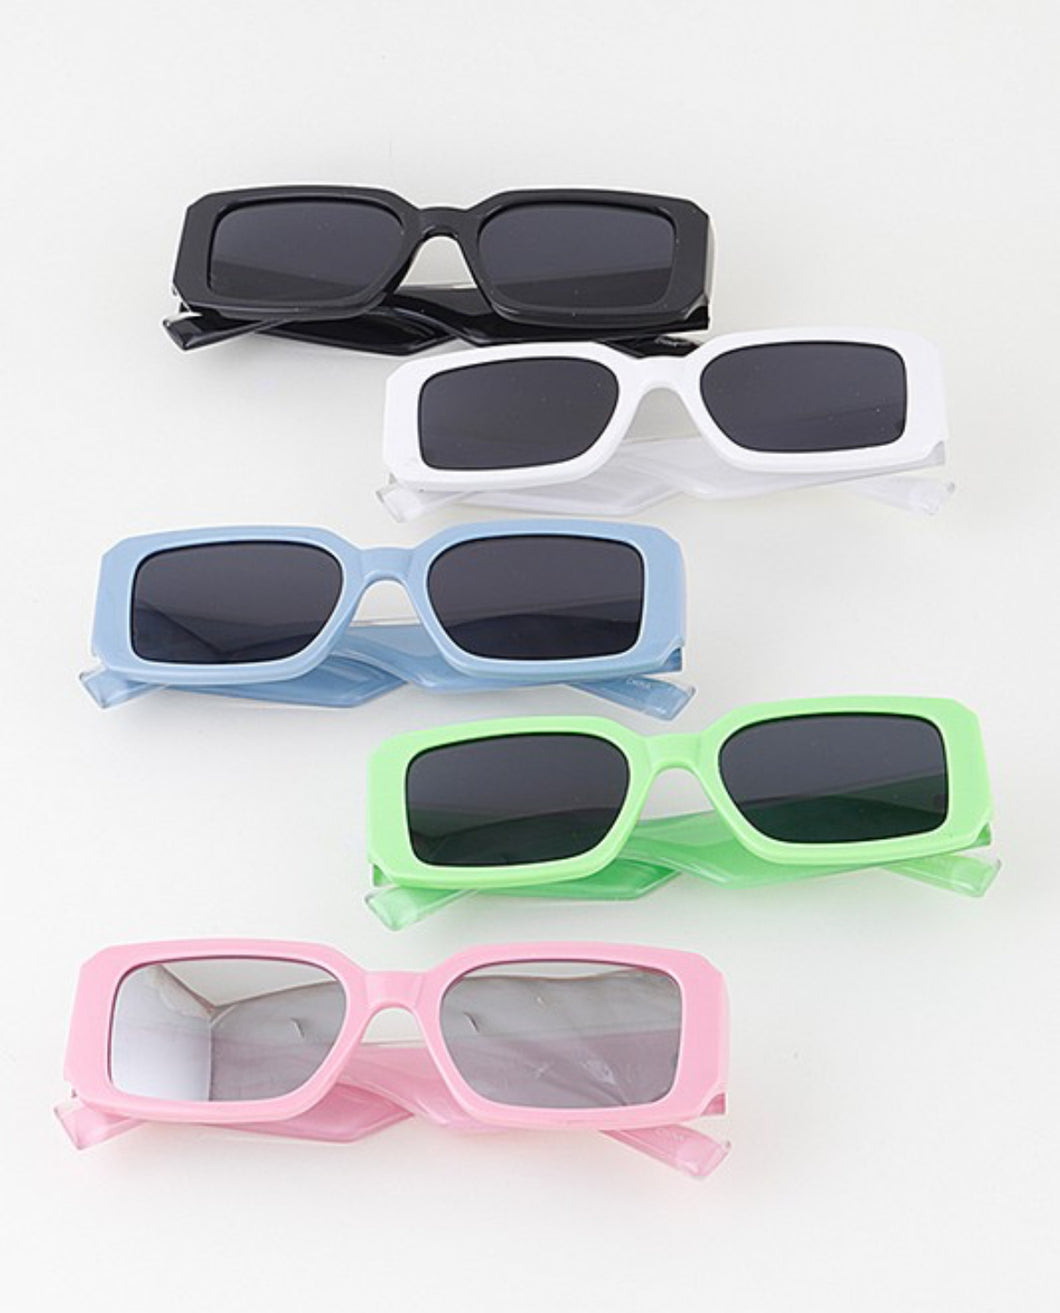 Square frame shades